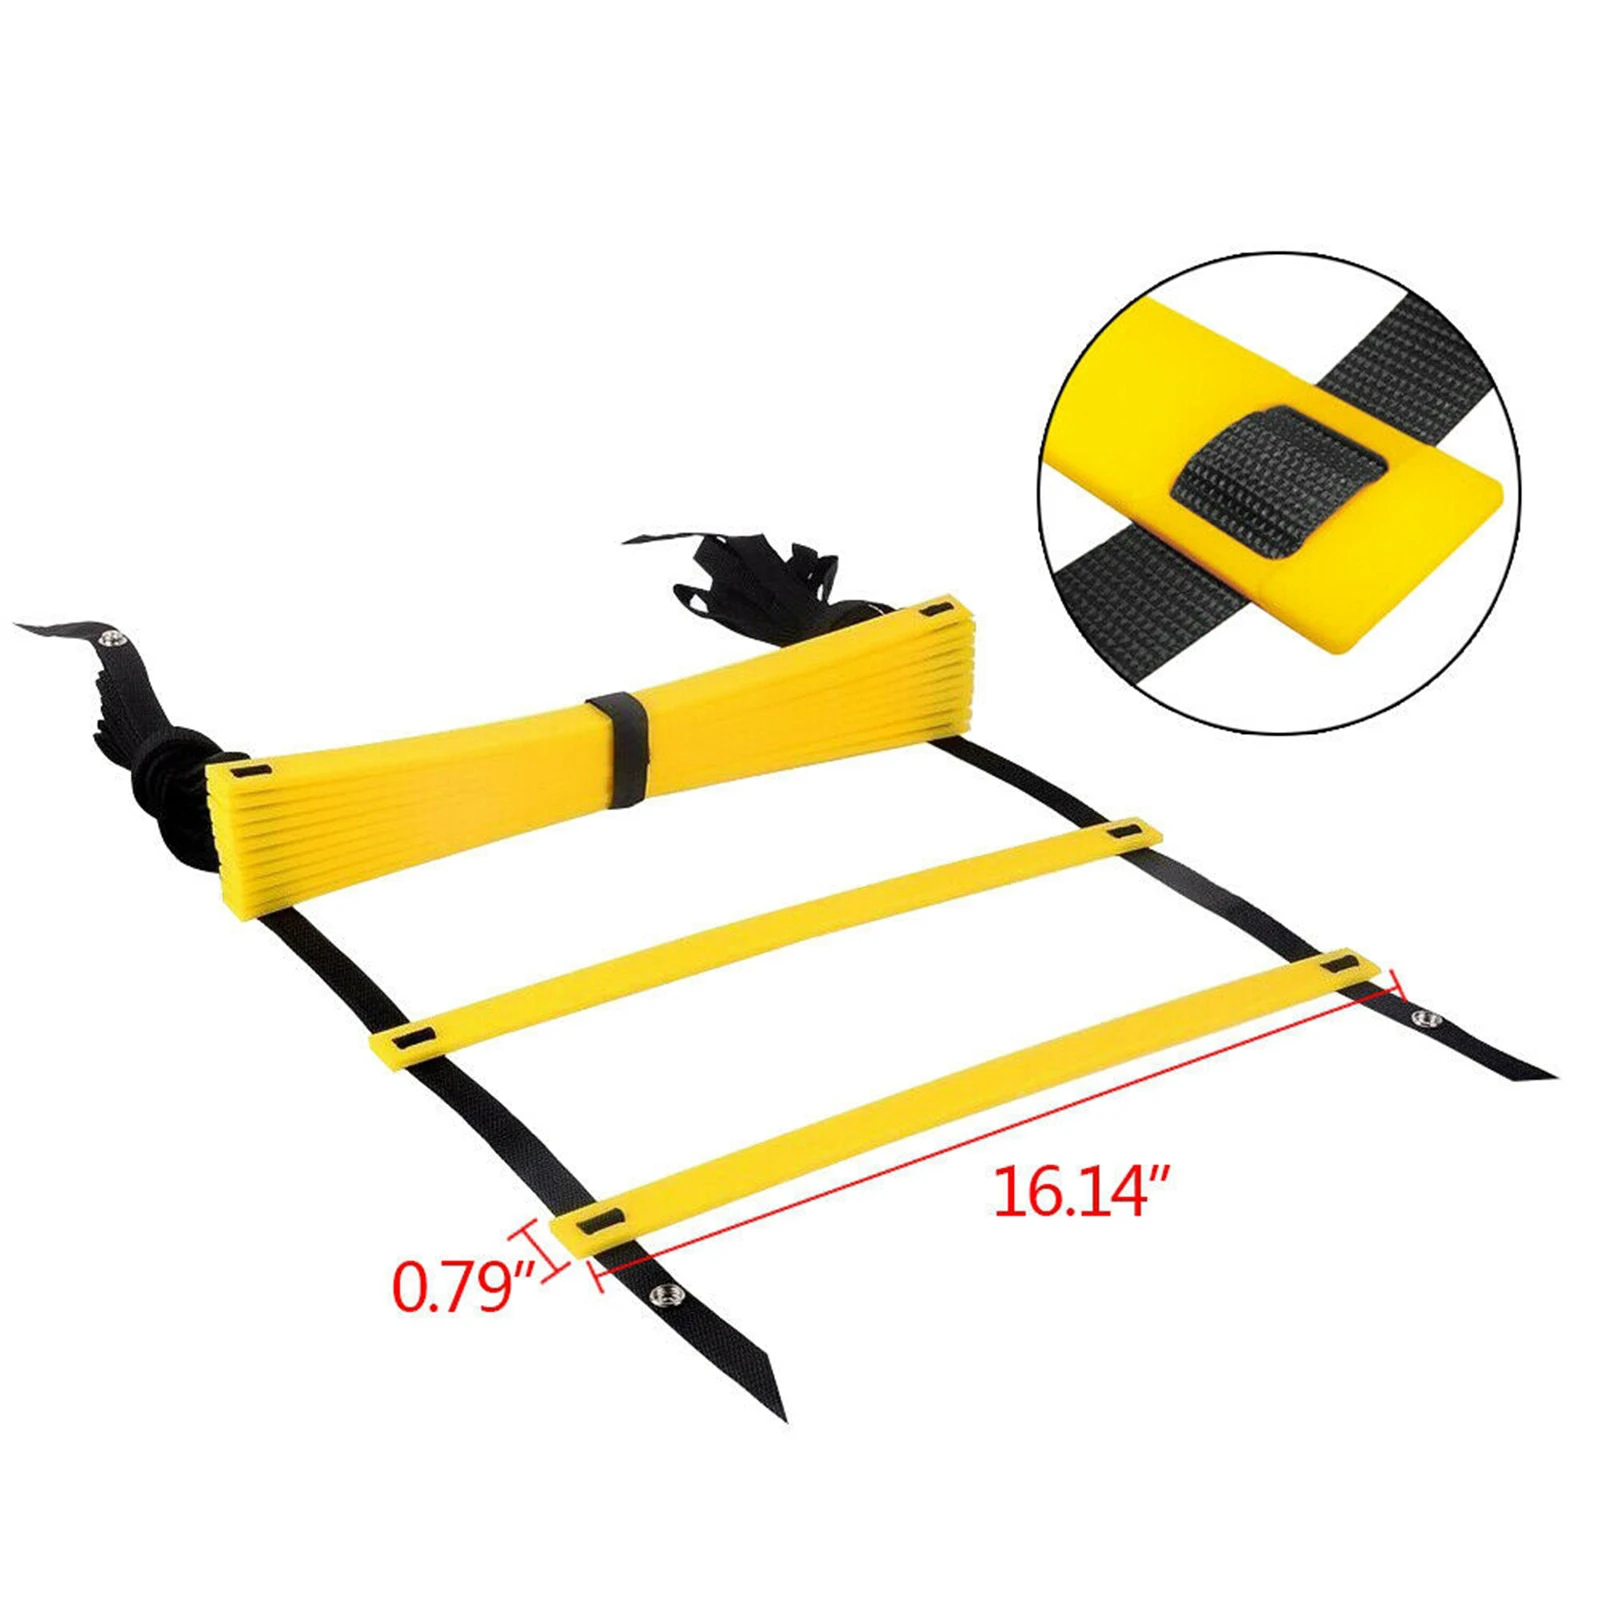 Agility Ladder Speed Training Equipment Set Improves Coordination, Speed ,Power